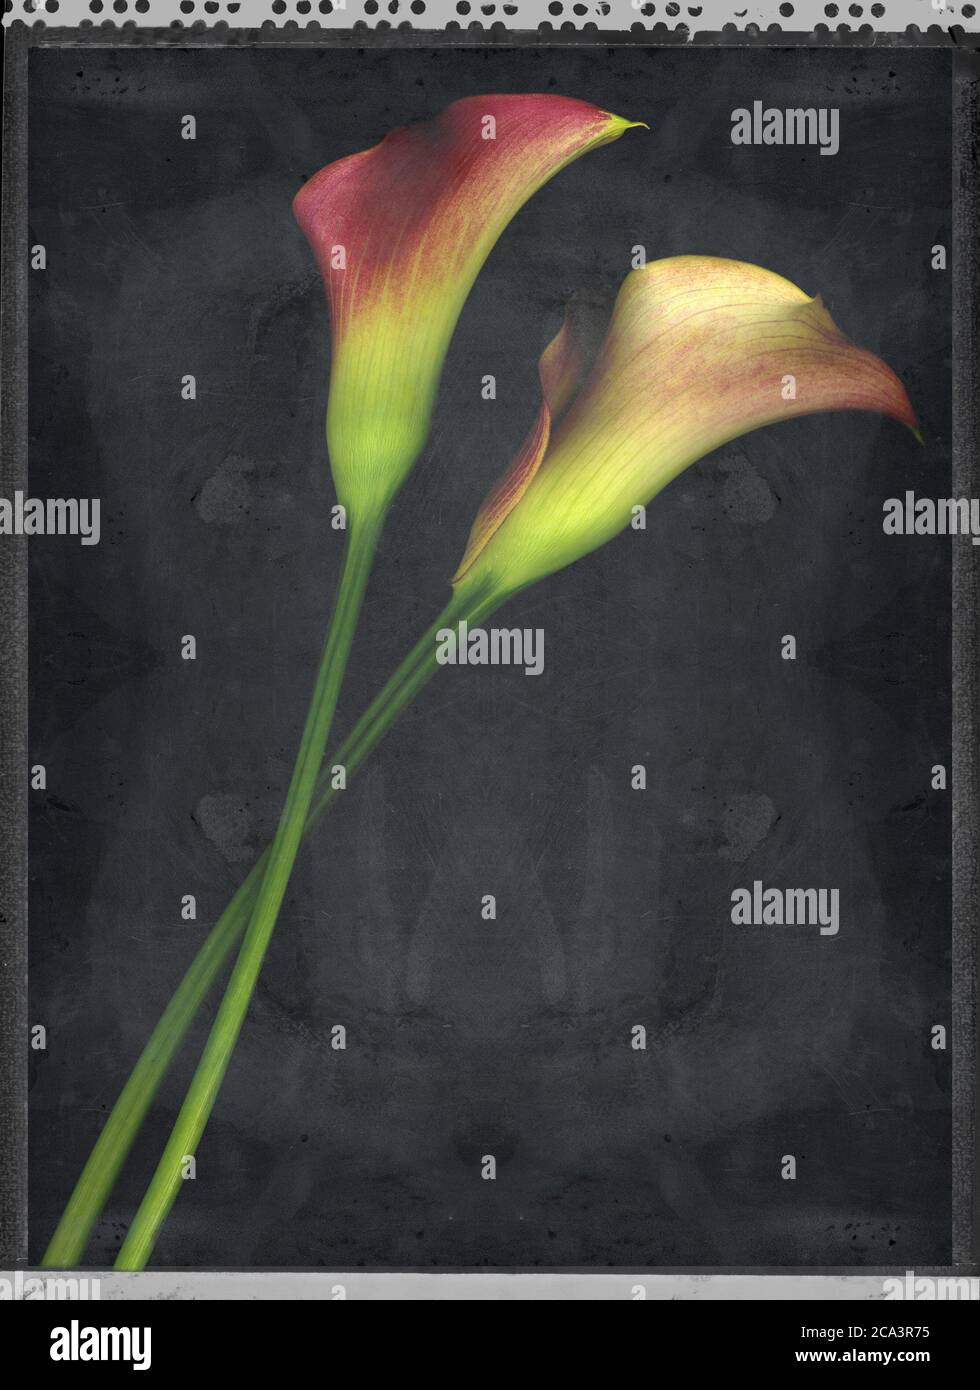 Calla lily flowers on Polaroid film Stock Photo